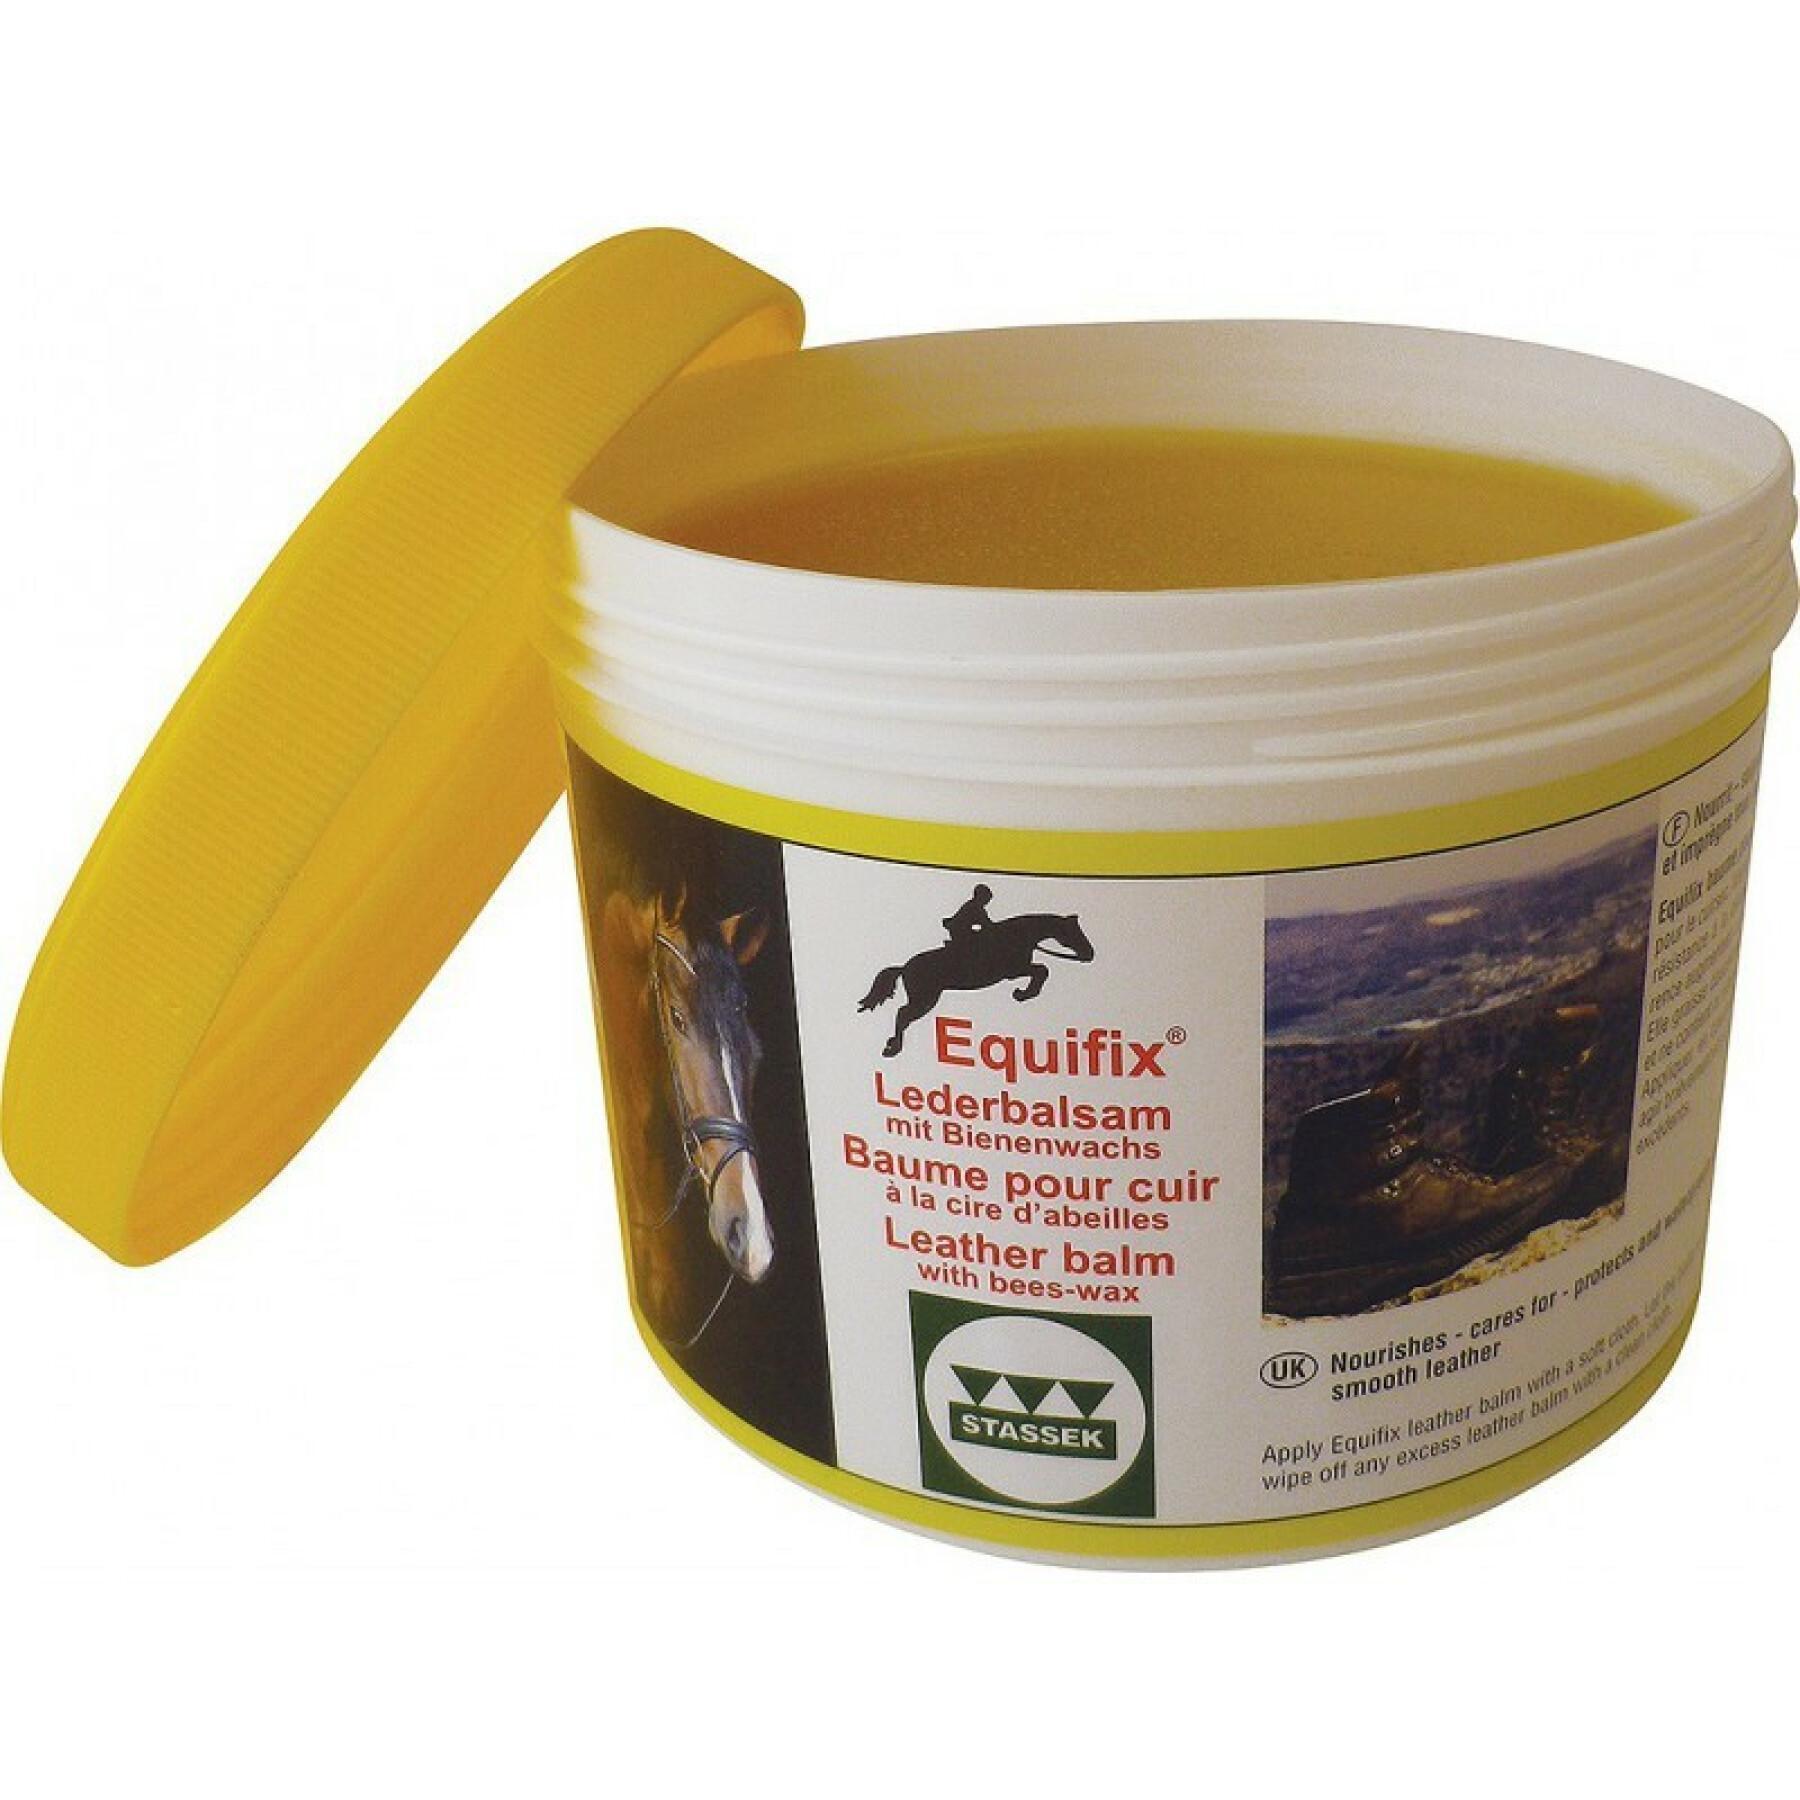 Hoof cream for horses Stassek Equifix 500 ml